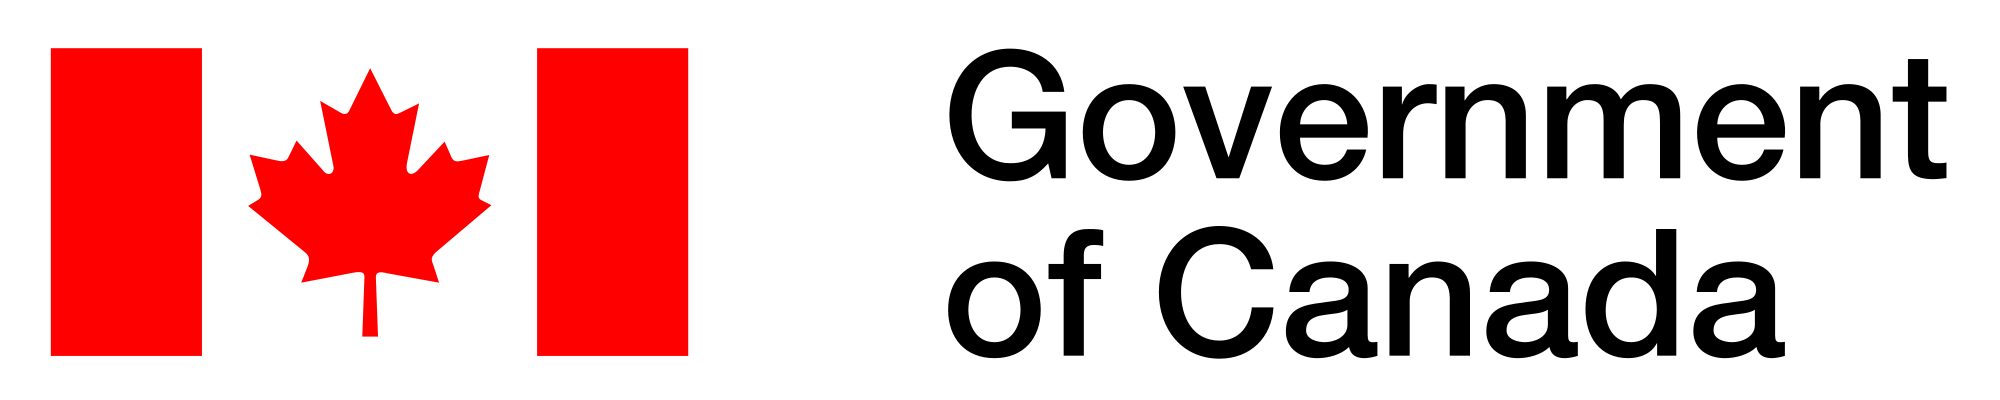 Canada Government Logo - File:Government of Canada logo.svg - Wikimedia Commons